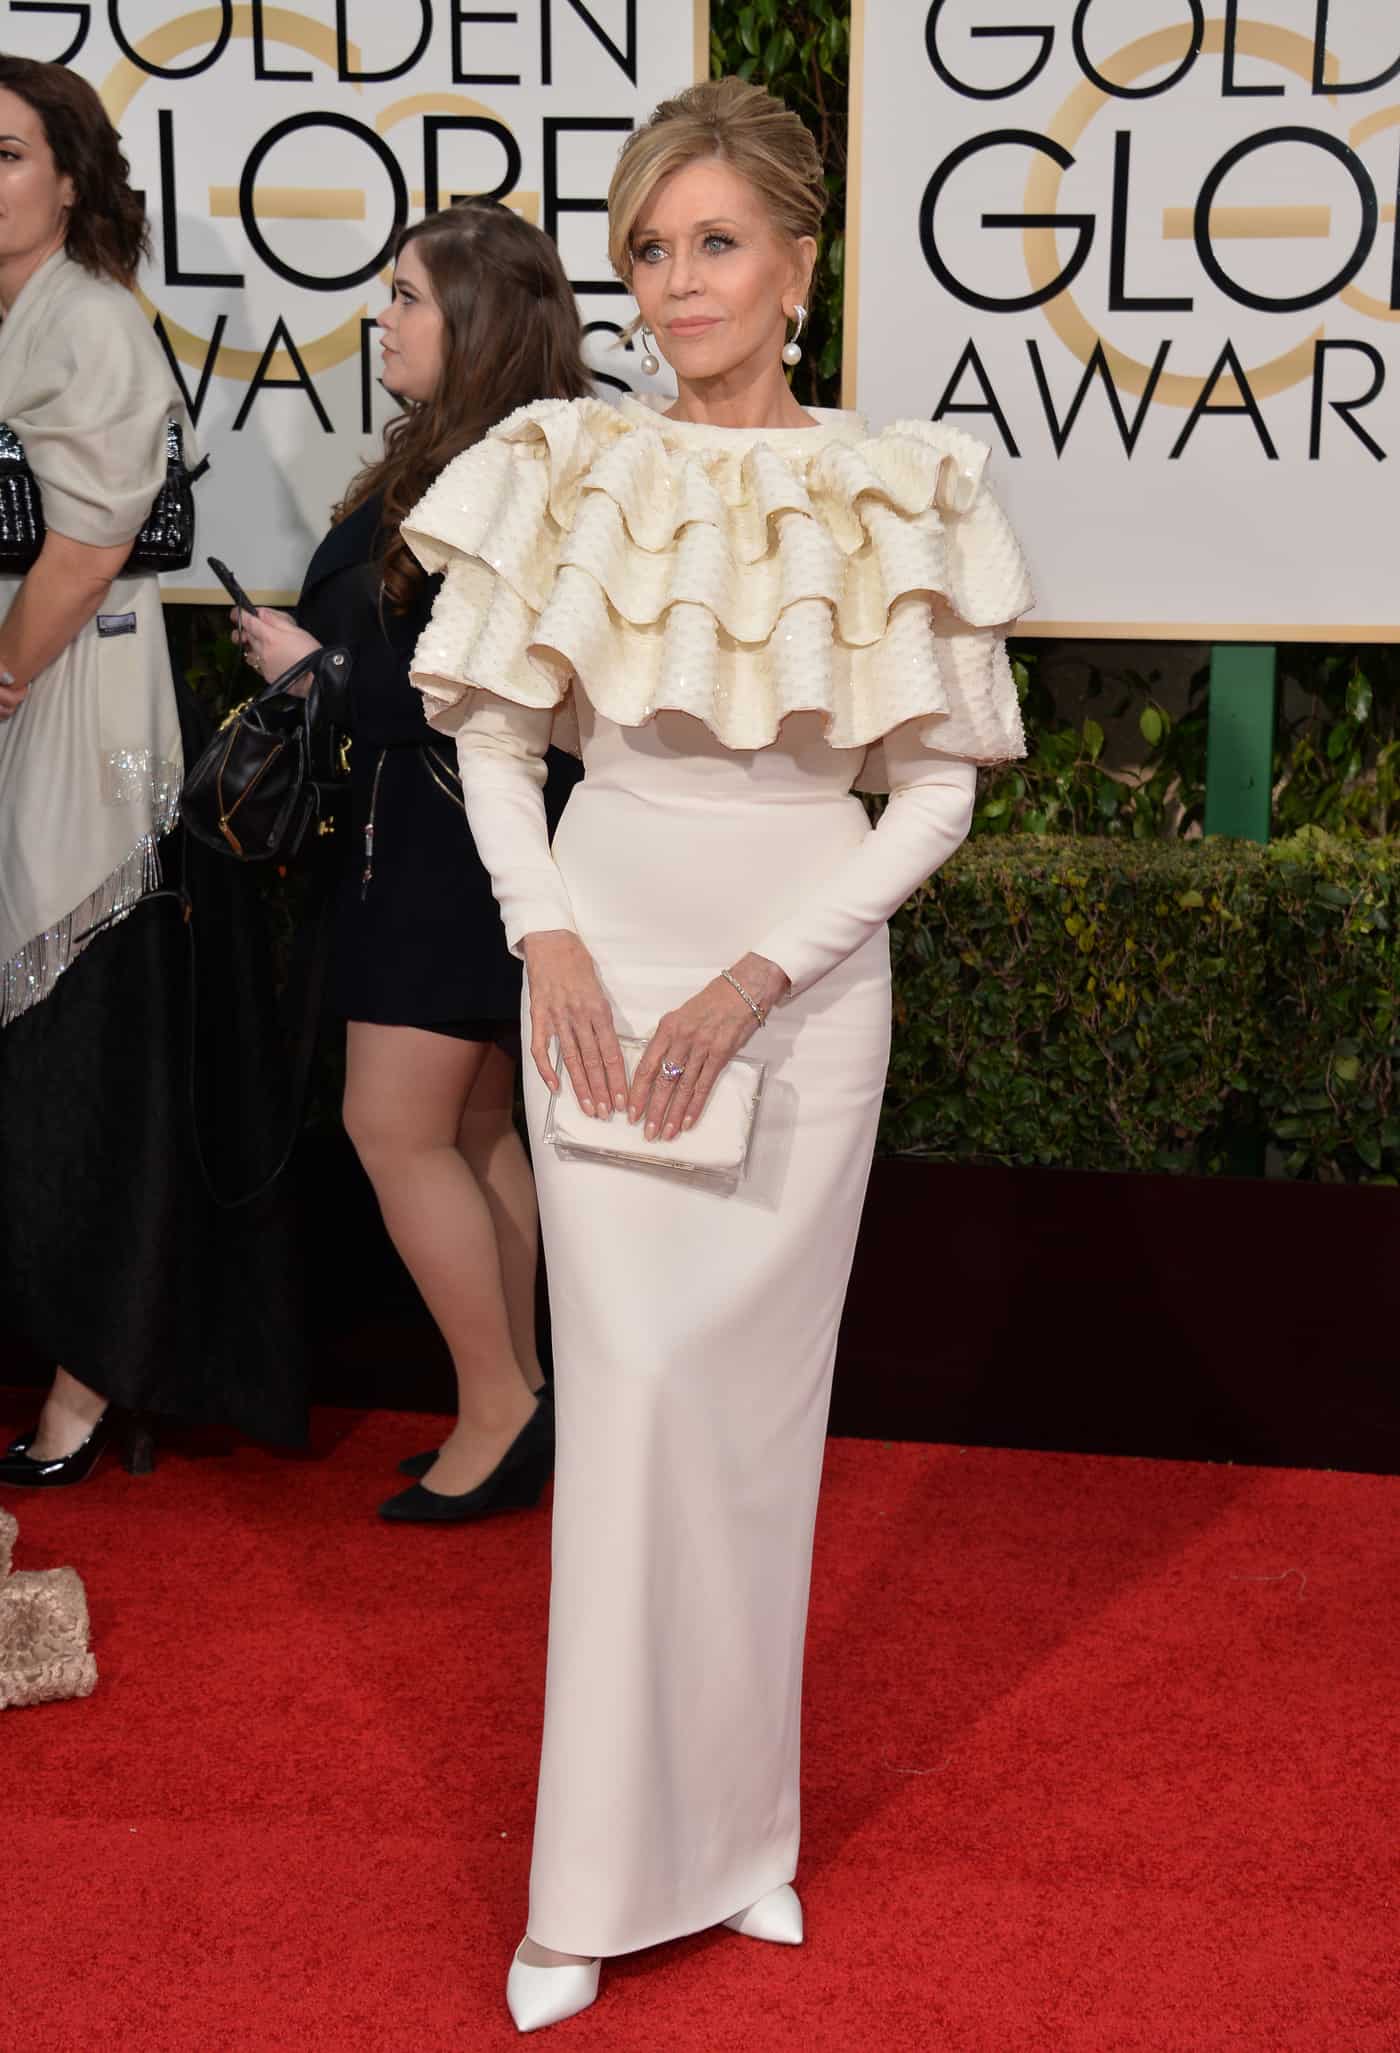 The Secret Reason Jane Fonda Wore This Dress at the 2016 Golden Globes